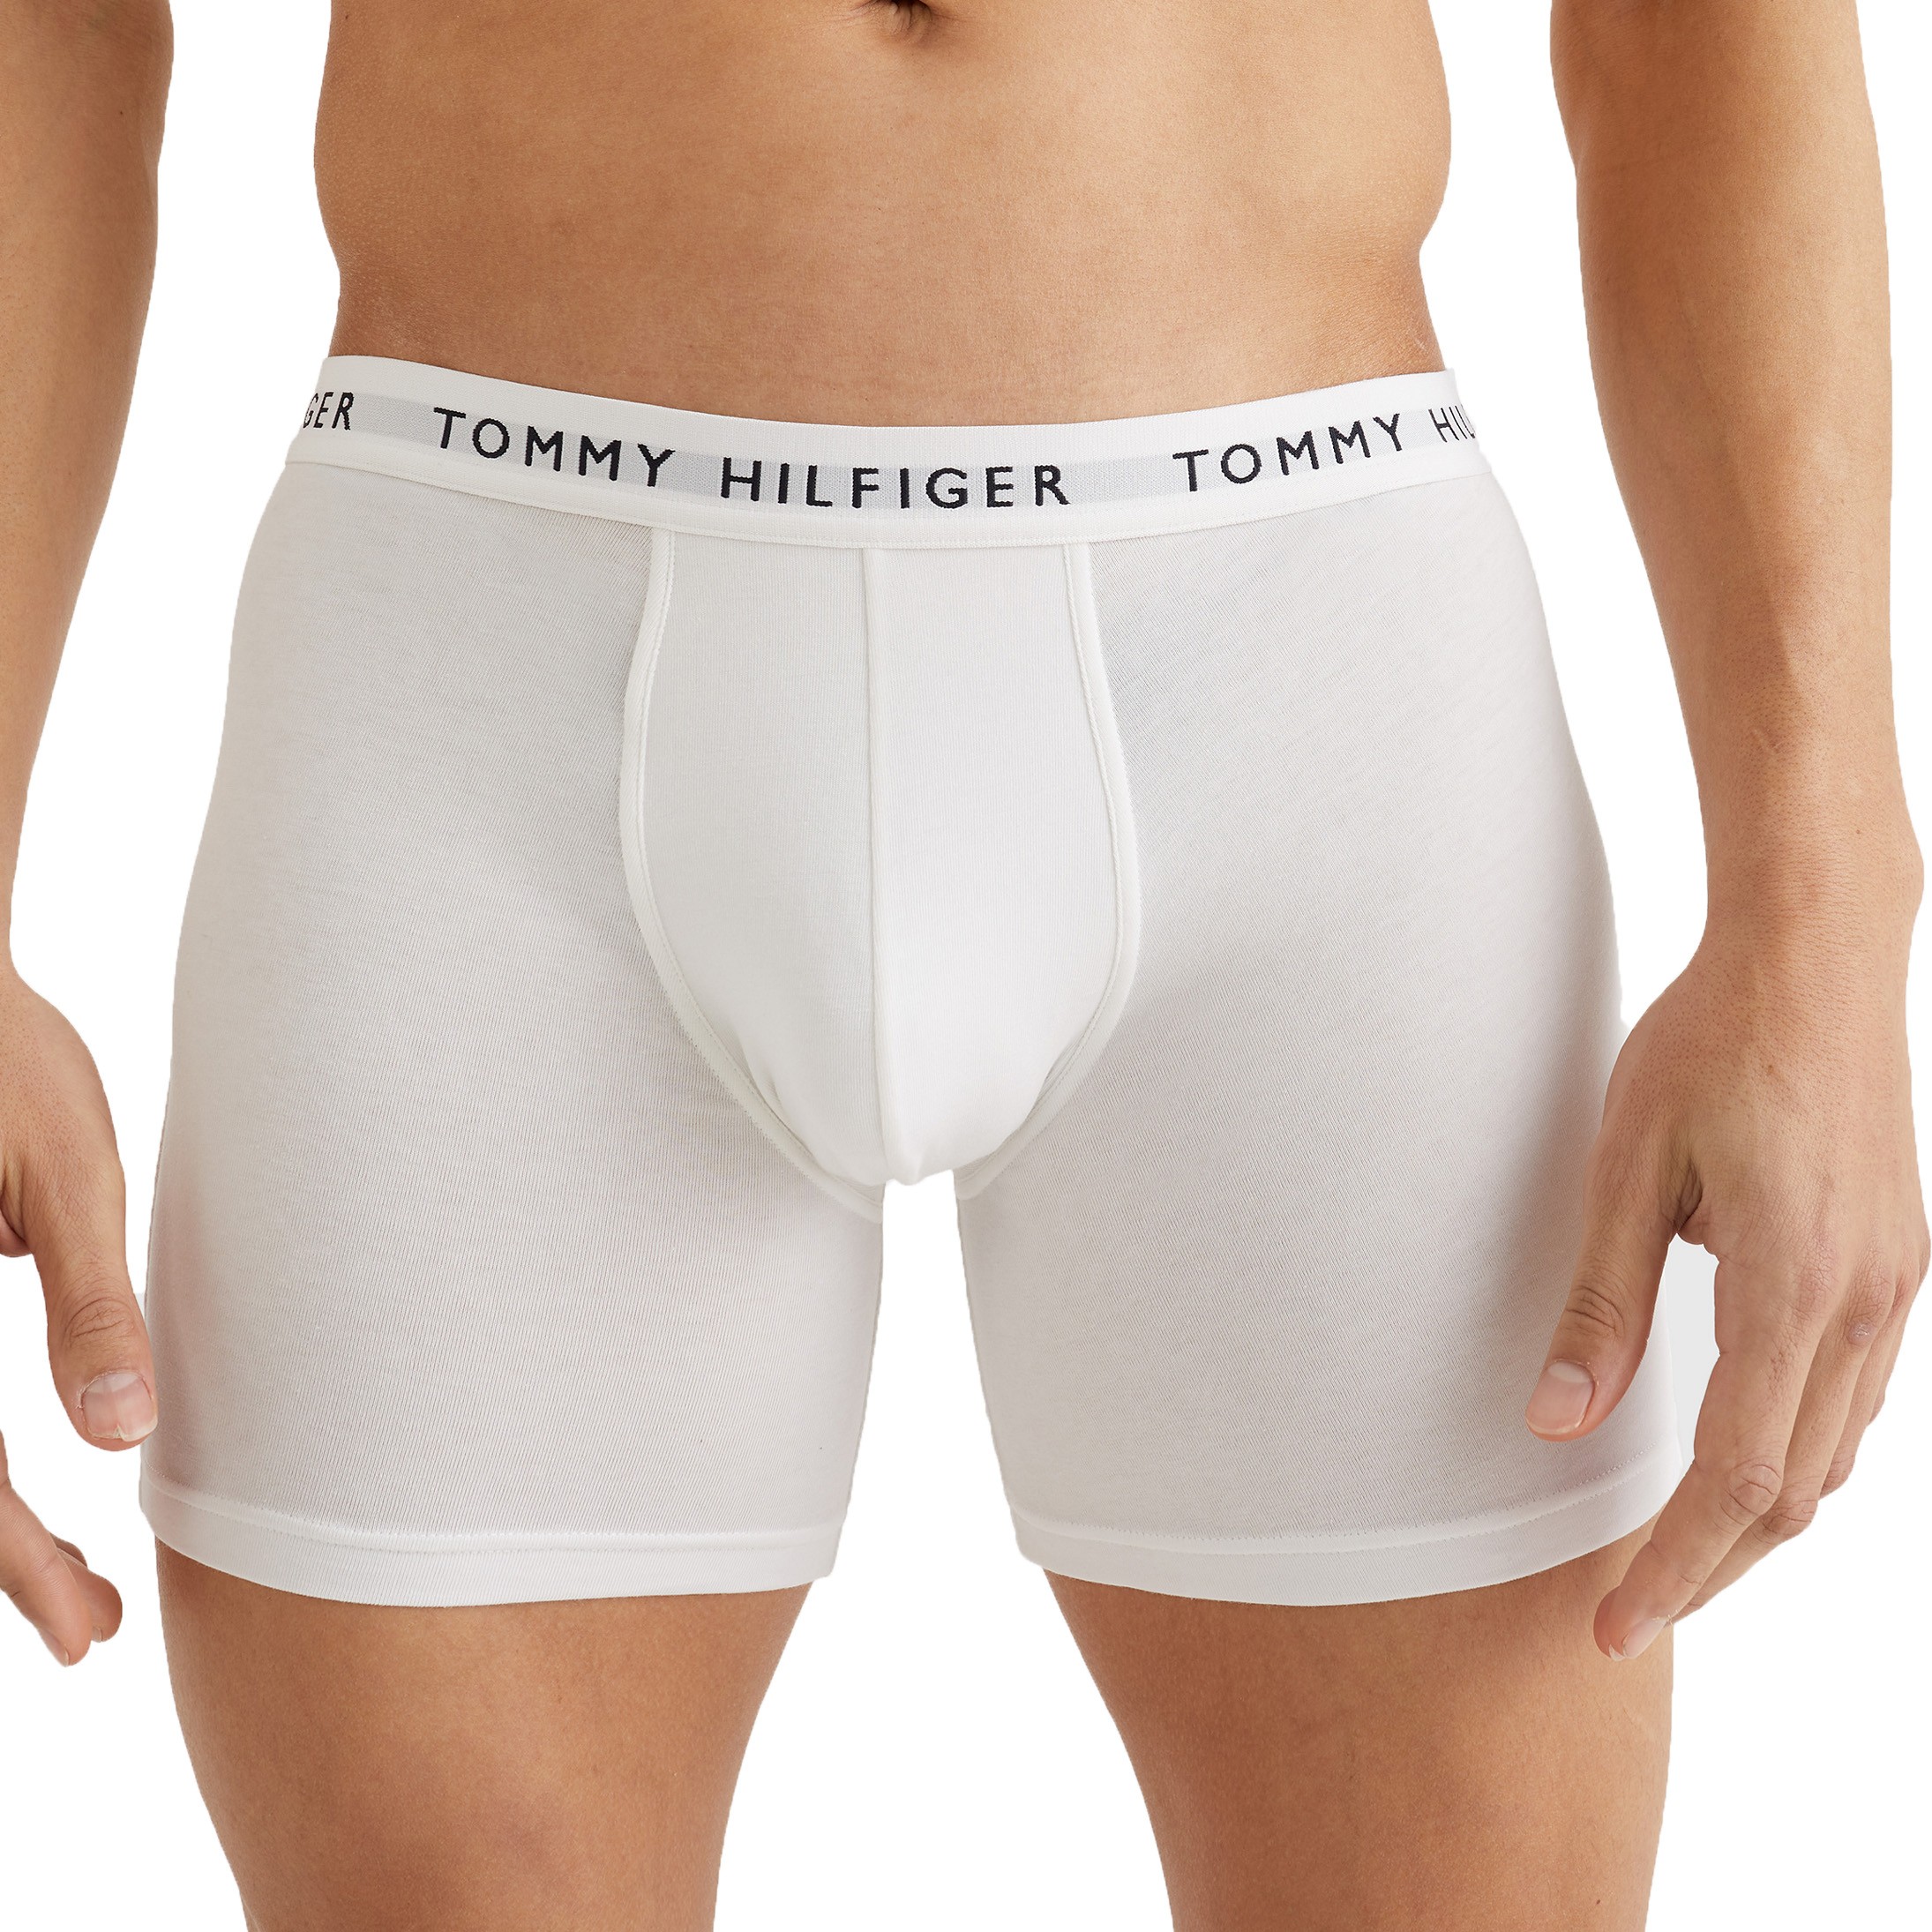 Lined waist boxer briefs 3-pack, Tommy Hilfiger